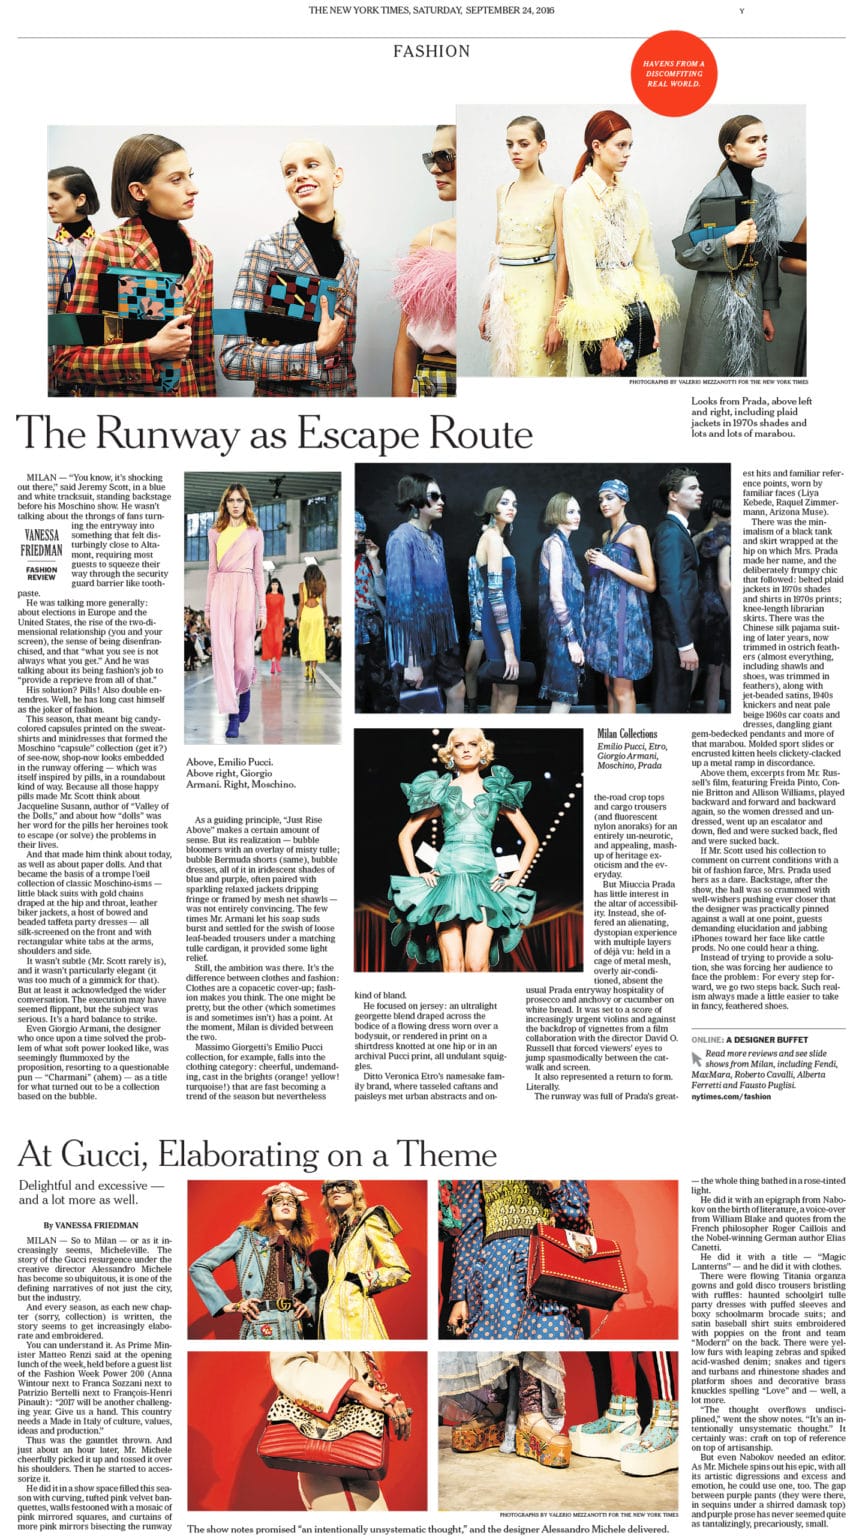 Prada, Gucci and Armani Fashion show Backstage, Photo by Valerio Mezzanotti for The New York Times